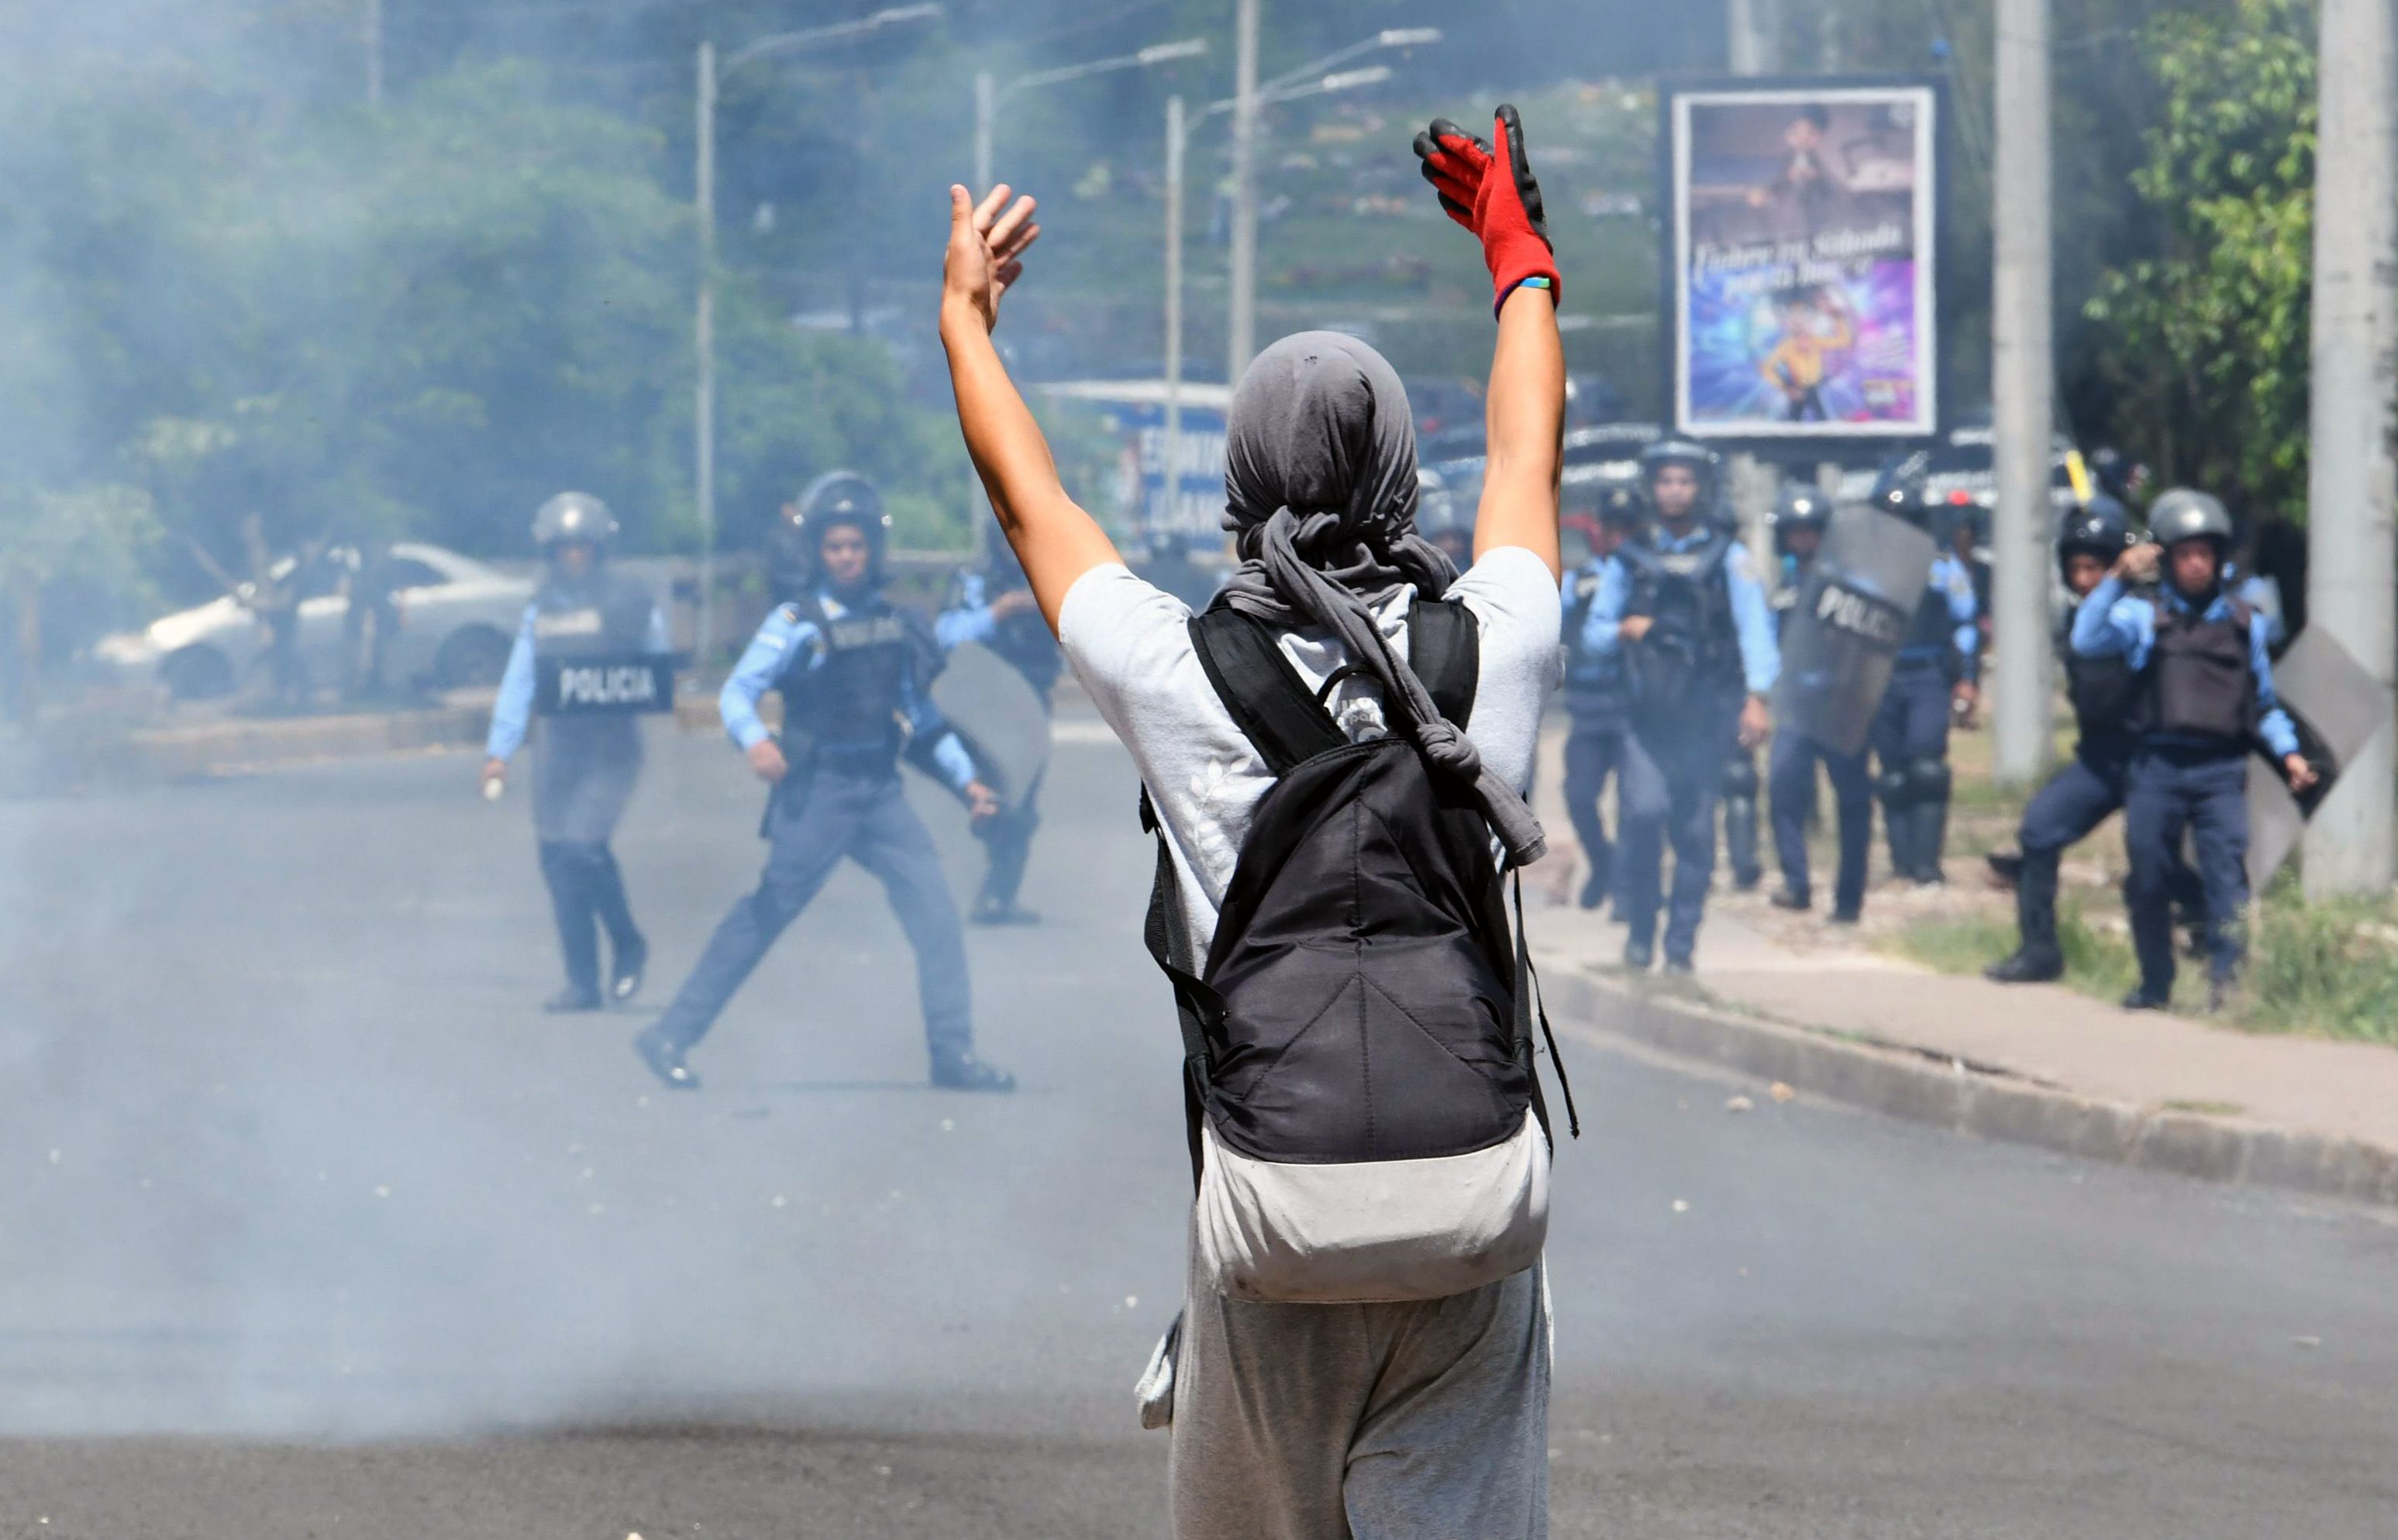 Estudiantes universitarios se enfrentan con la Policía en Tegucigalpa. (Foto Prensa Libre: AFP)